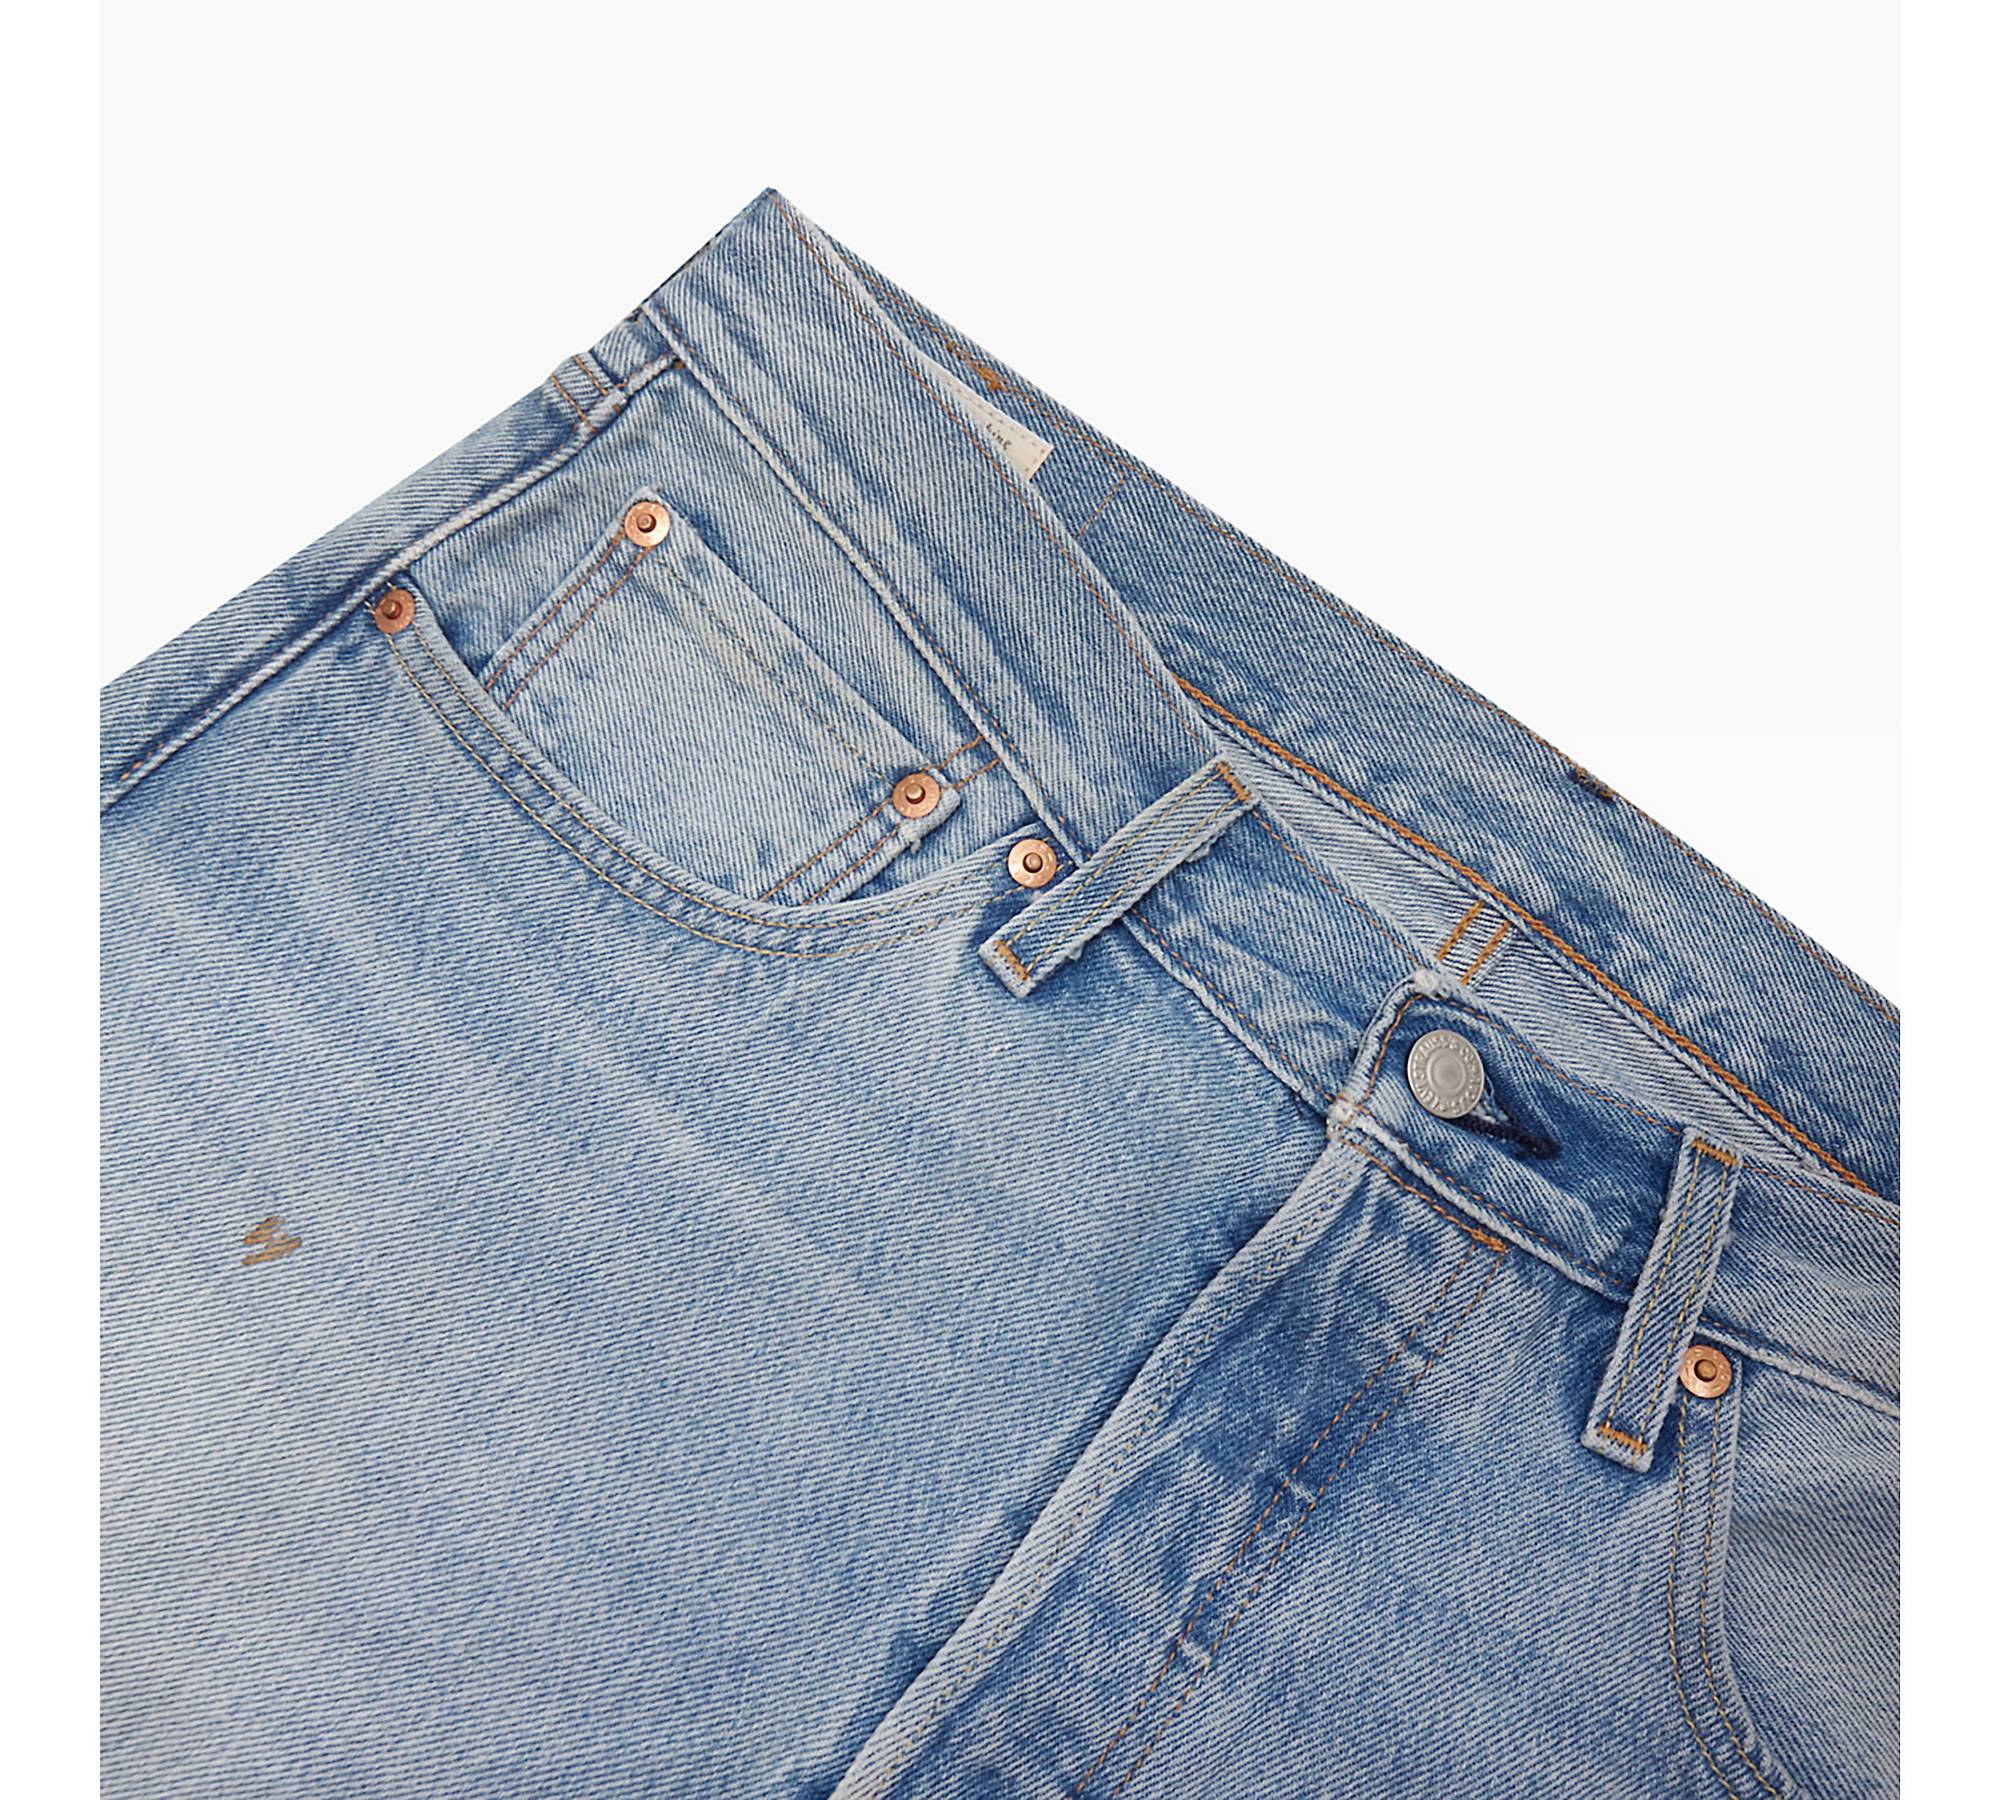 501® Original Fit Men's Jeans - Light Wash